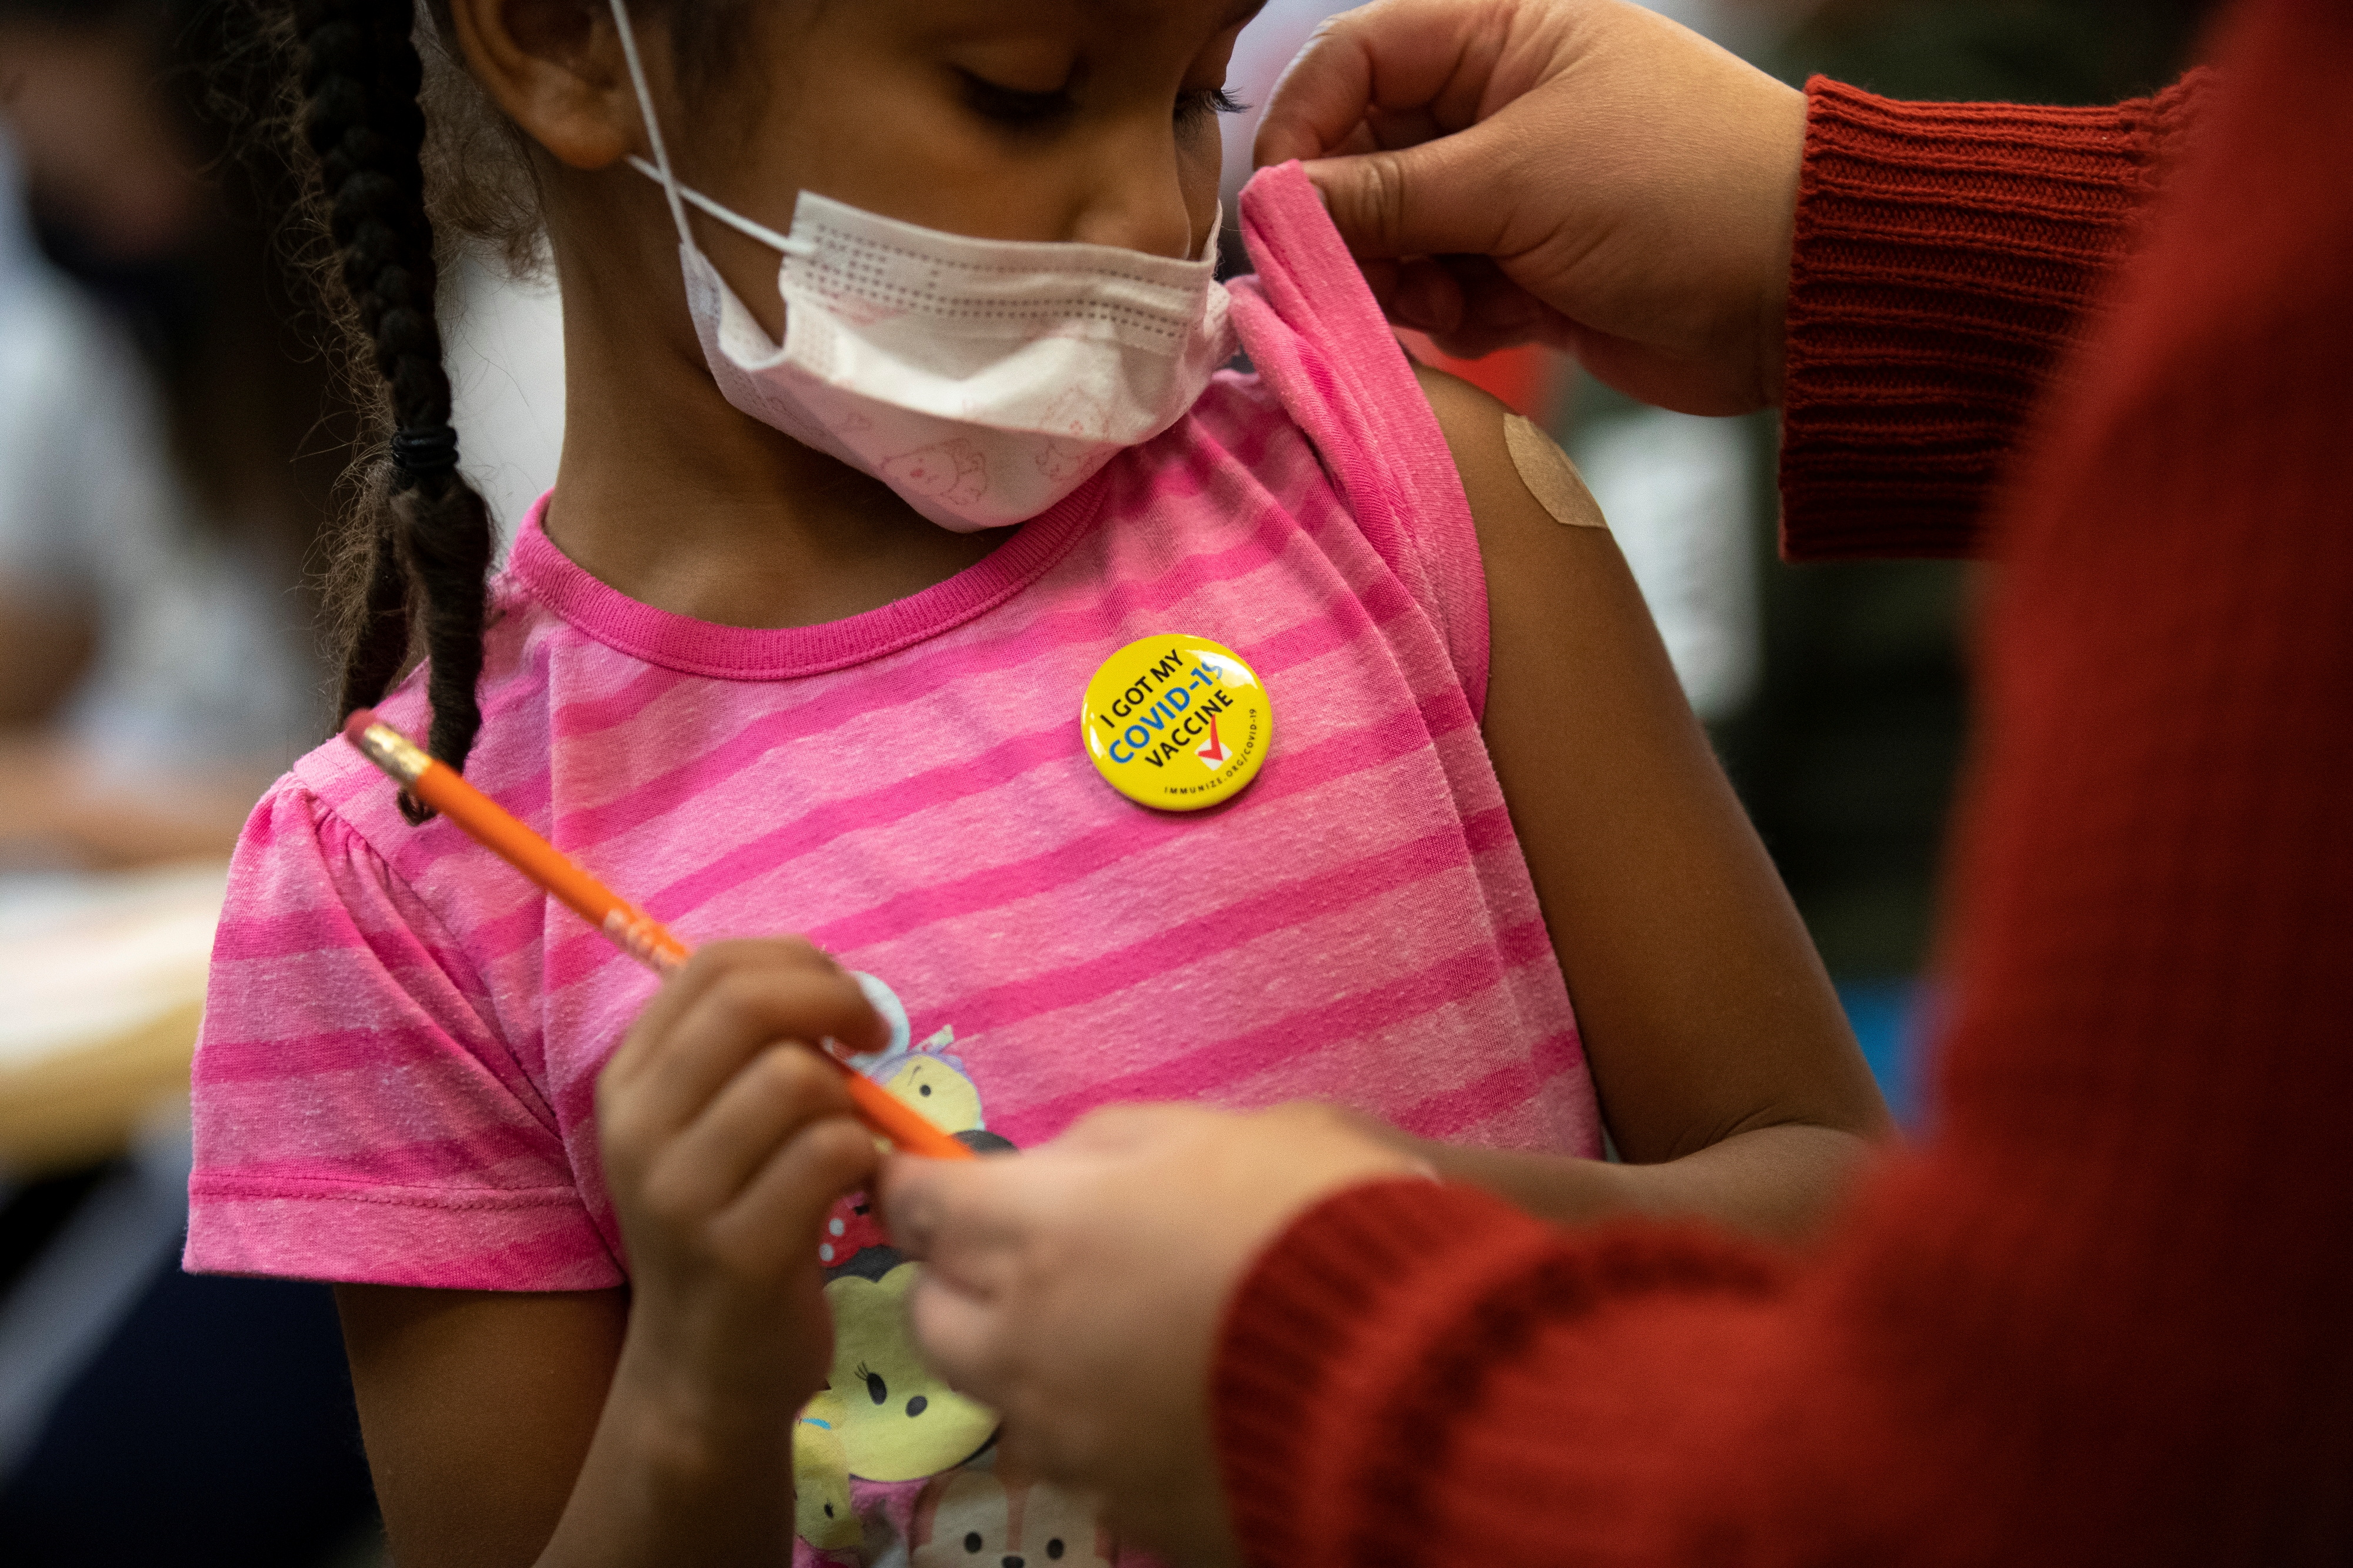 Children aged 5-11 obtain eligibility status to receive coronavirus disease (COVID-19) vaccines in Washington